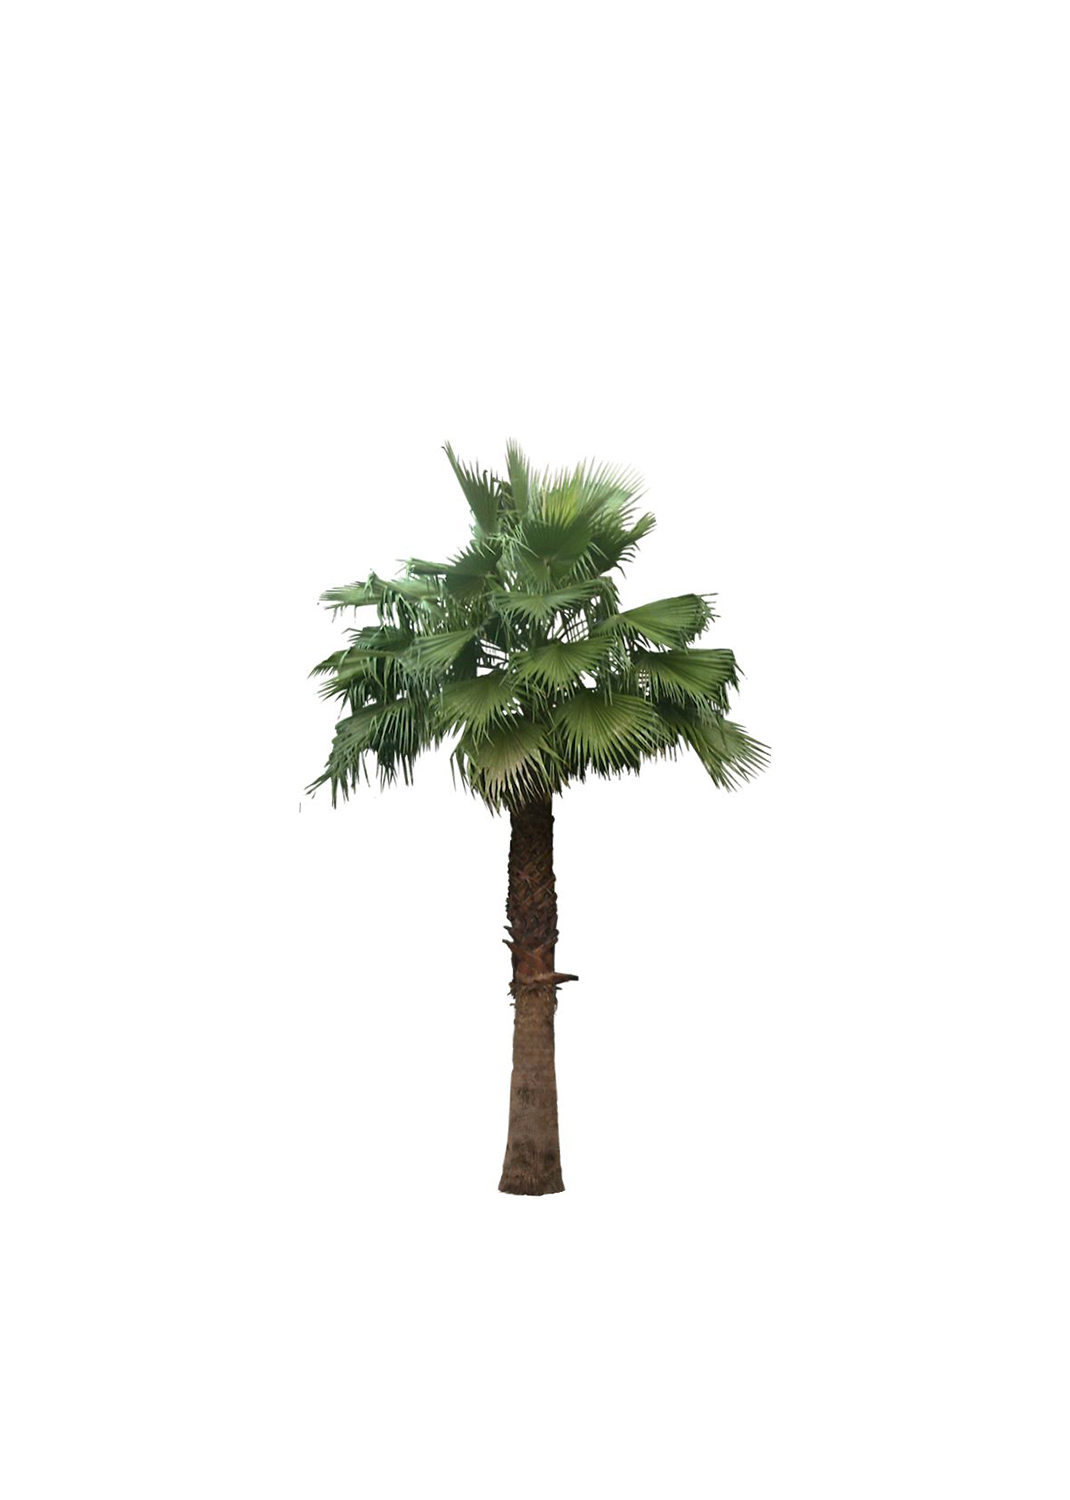 Mexican Fan Palm, Washingtonia Robusta {2m hight}